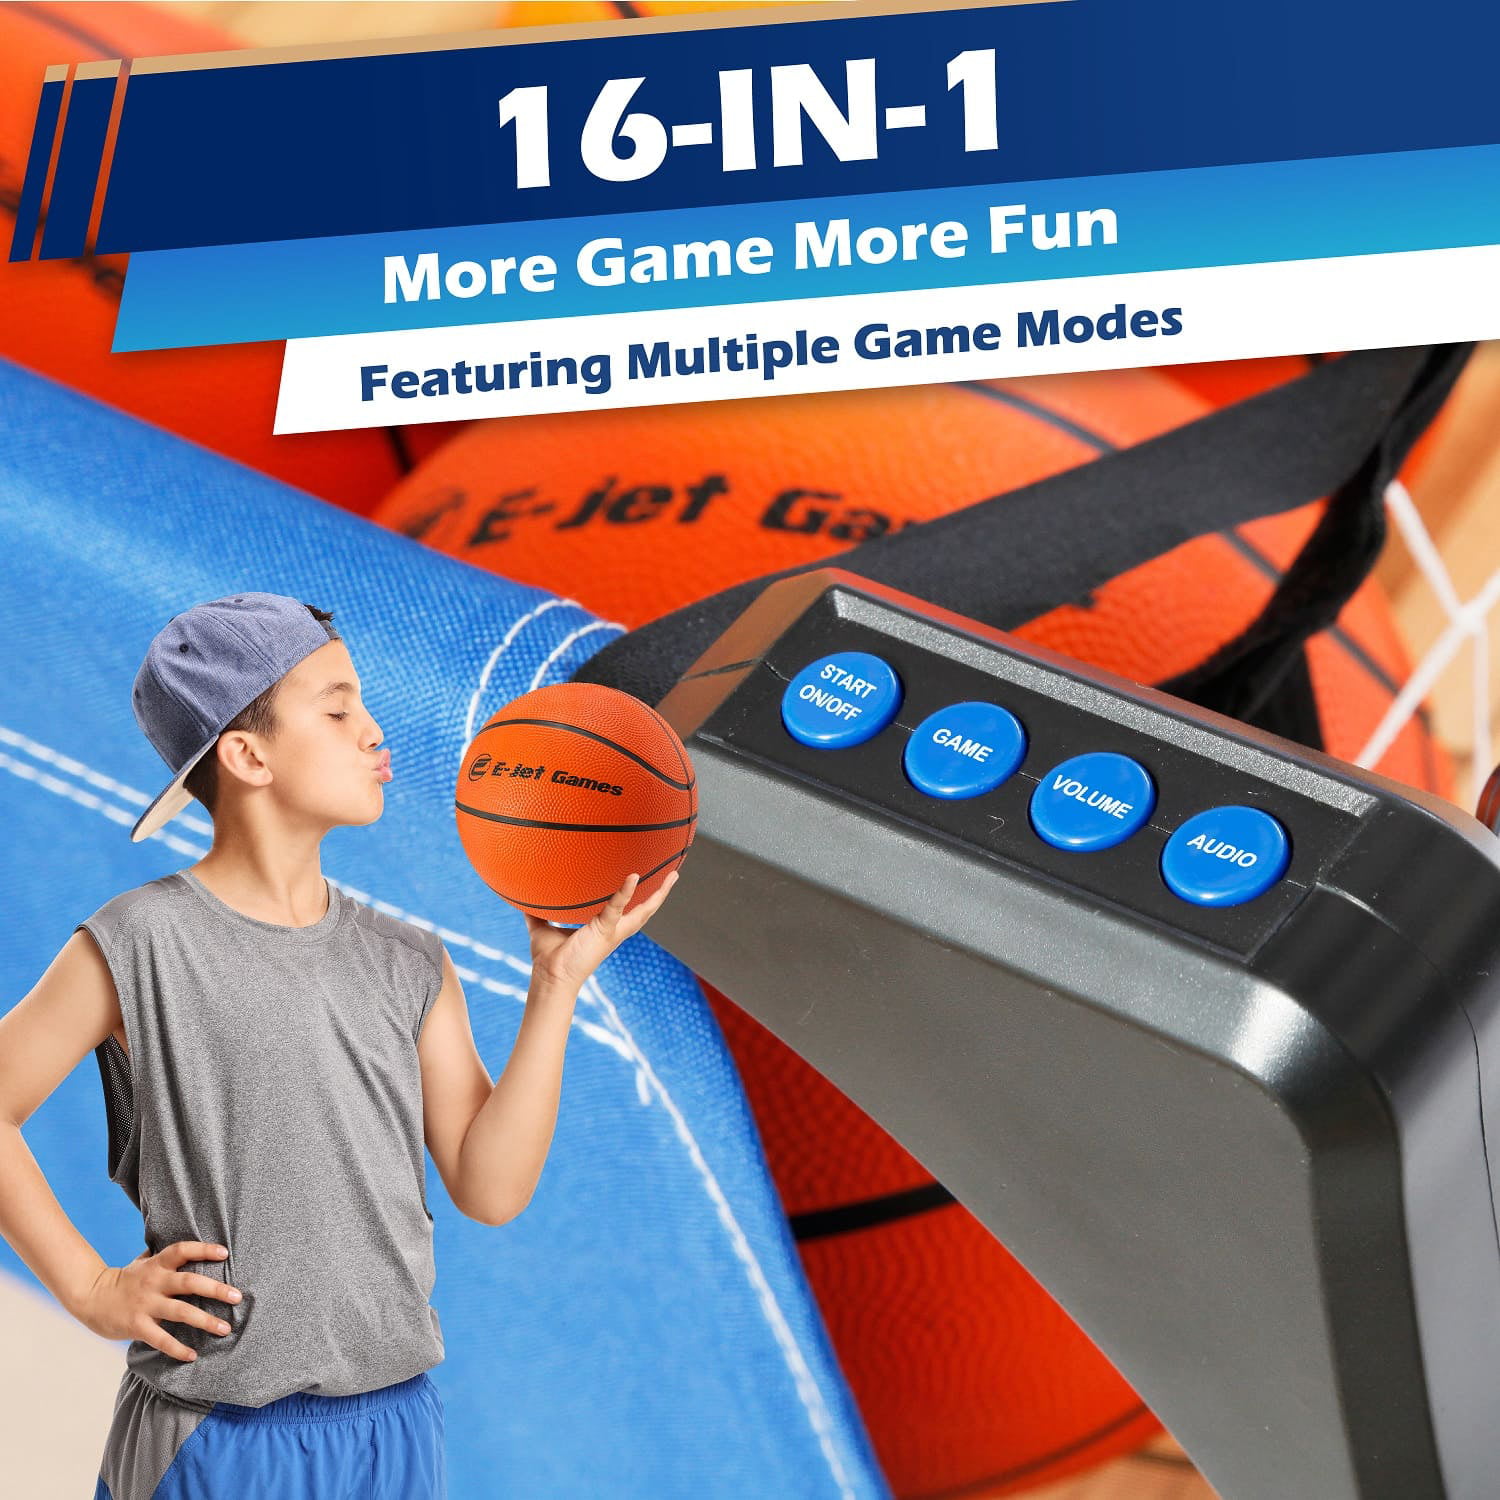 E-Jet Sport Game Basketball Arcade Games (Online Battle